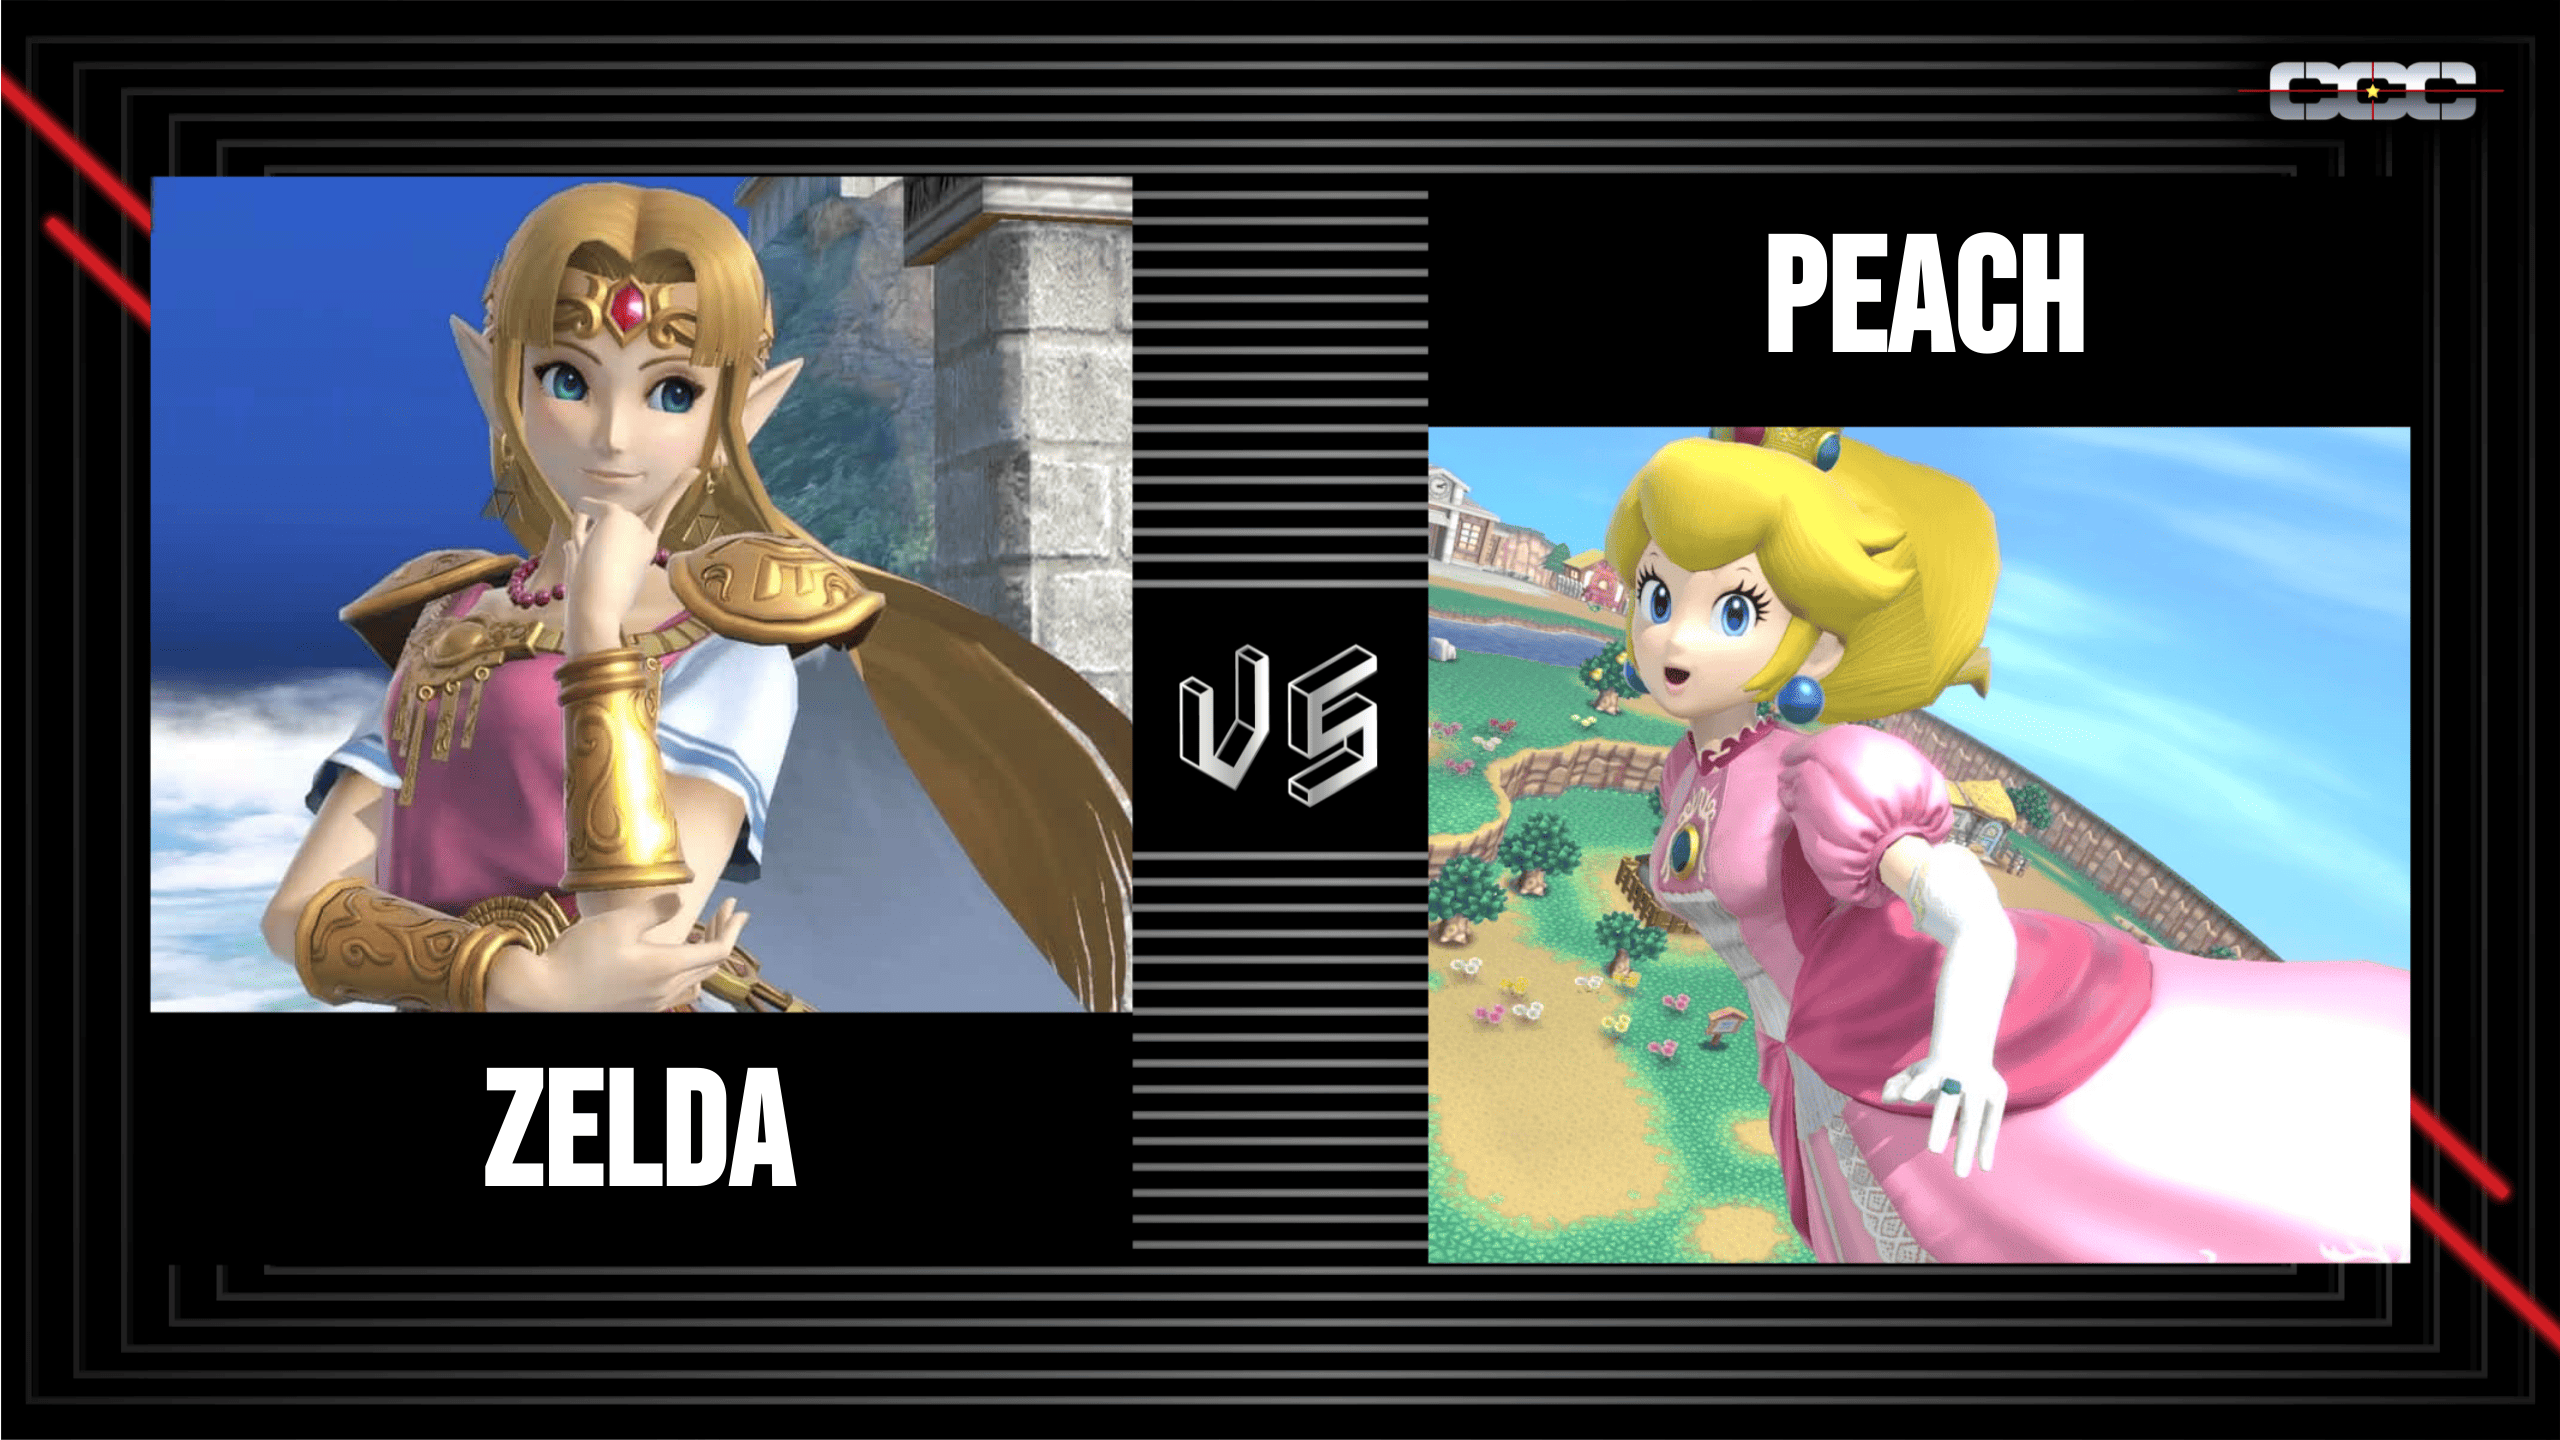 Peach vs. Zelda